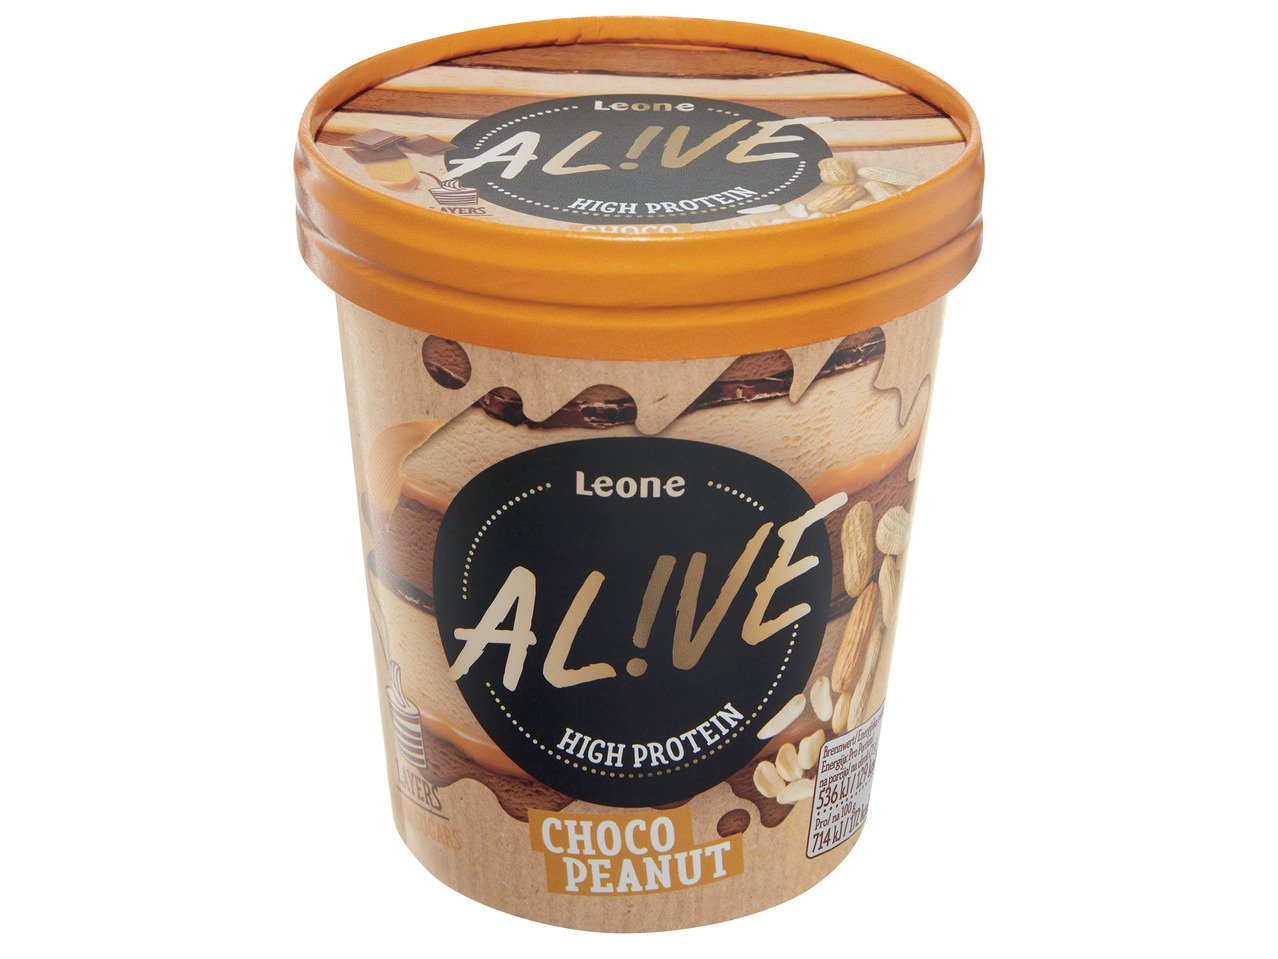 Leone Alive Протеинов сладолед